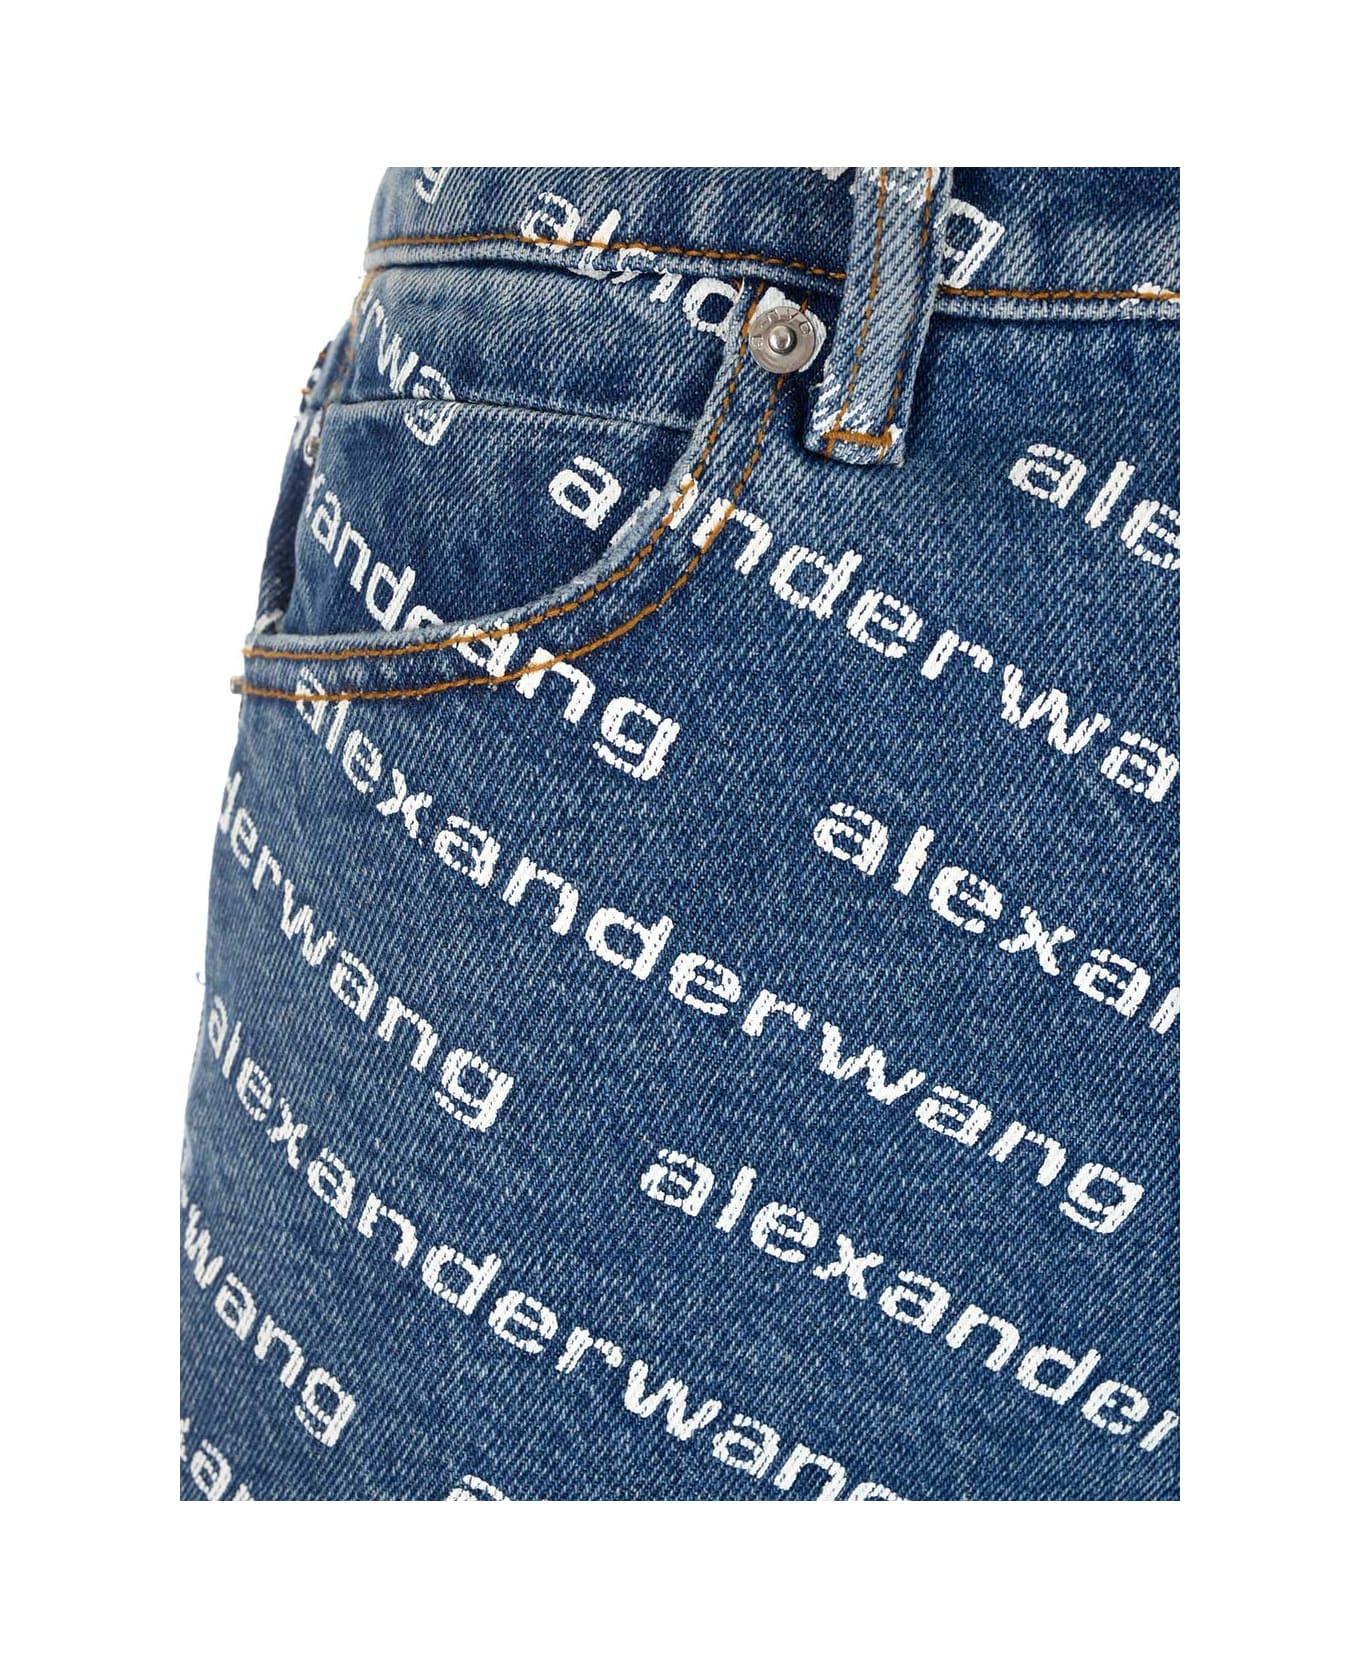 Alexander Wang 'bite' High-rise Shorts - DENIM BLUE